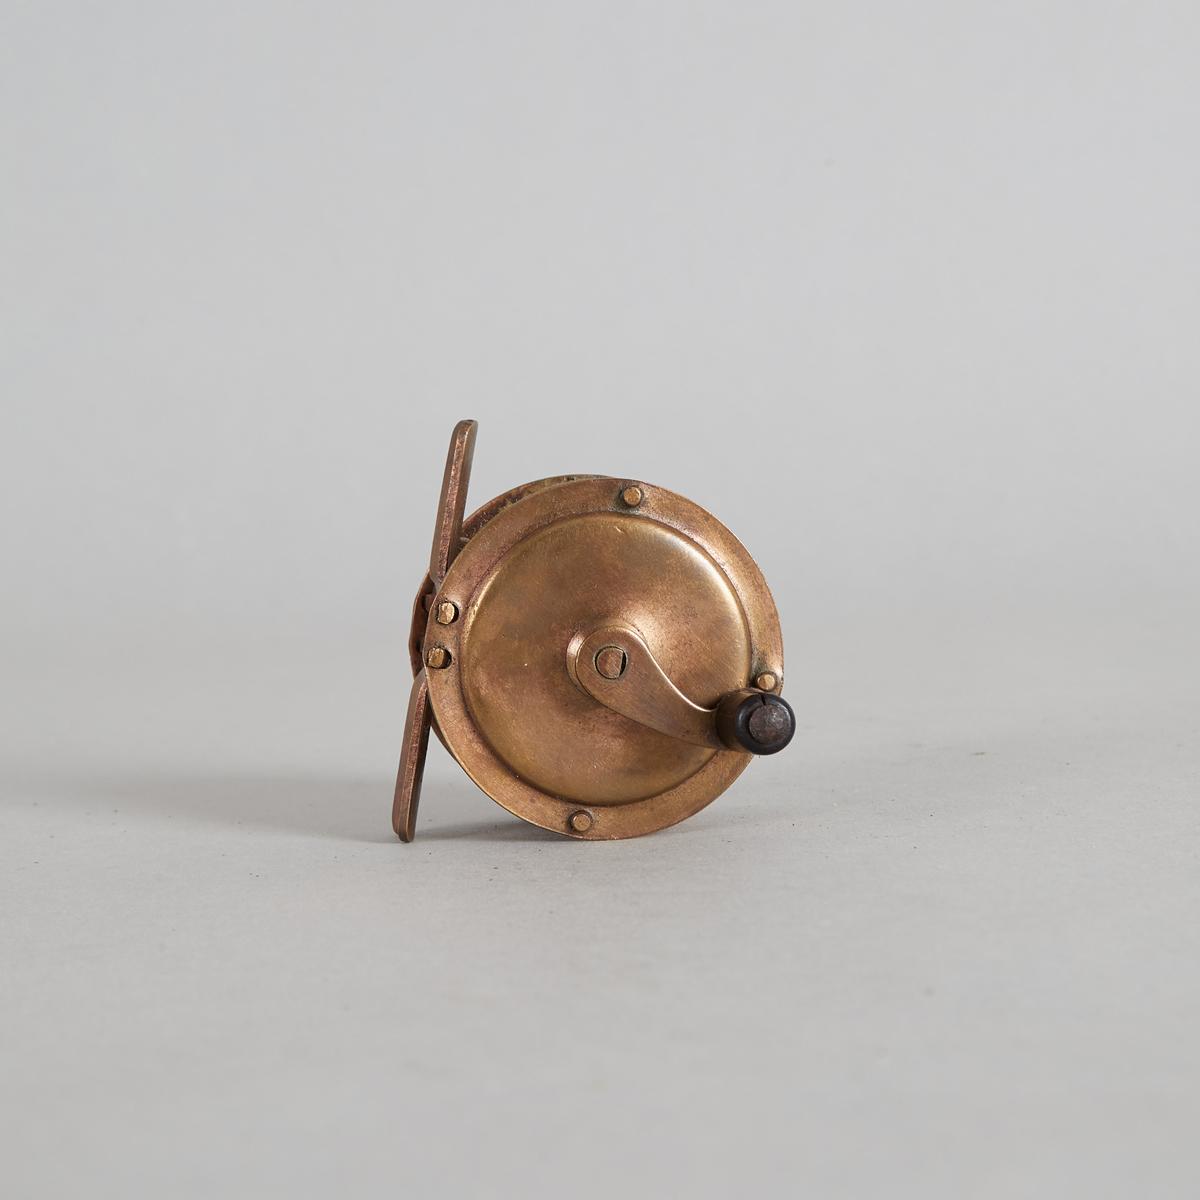 A Vintage Brass Fly Reel